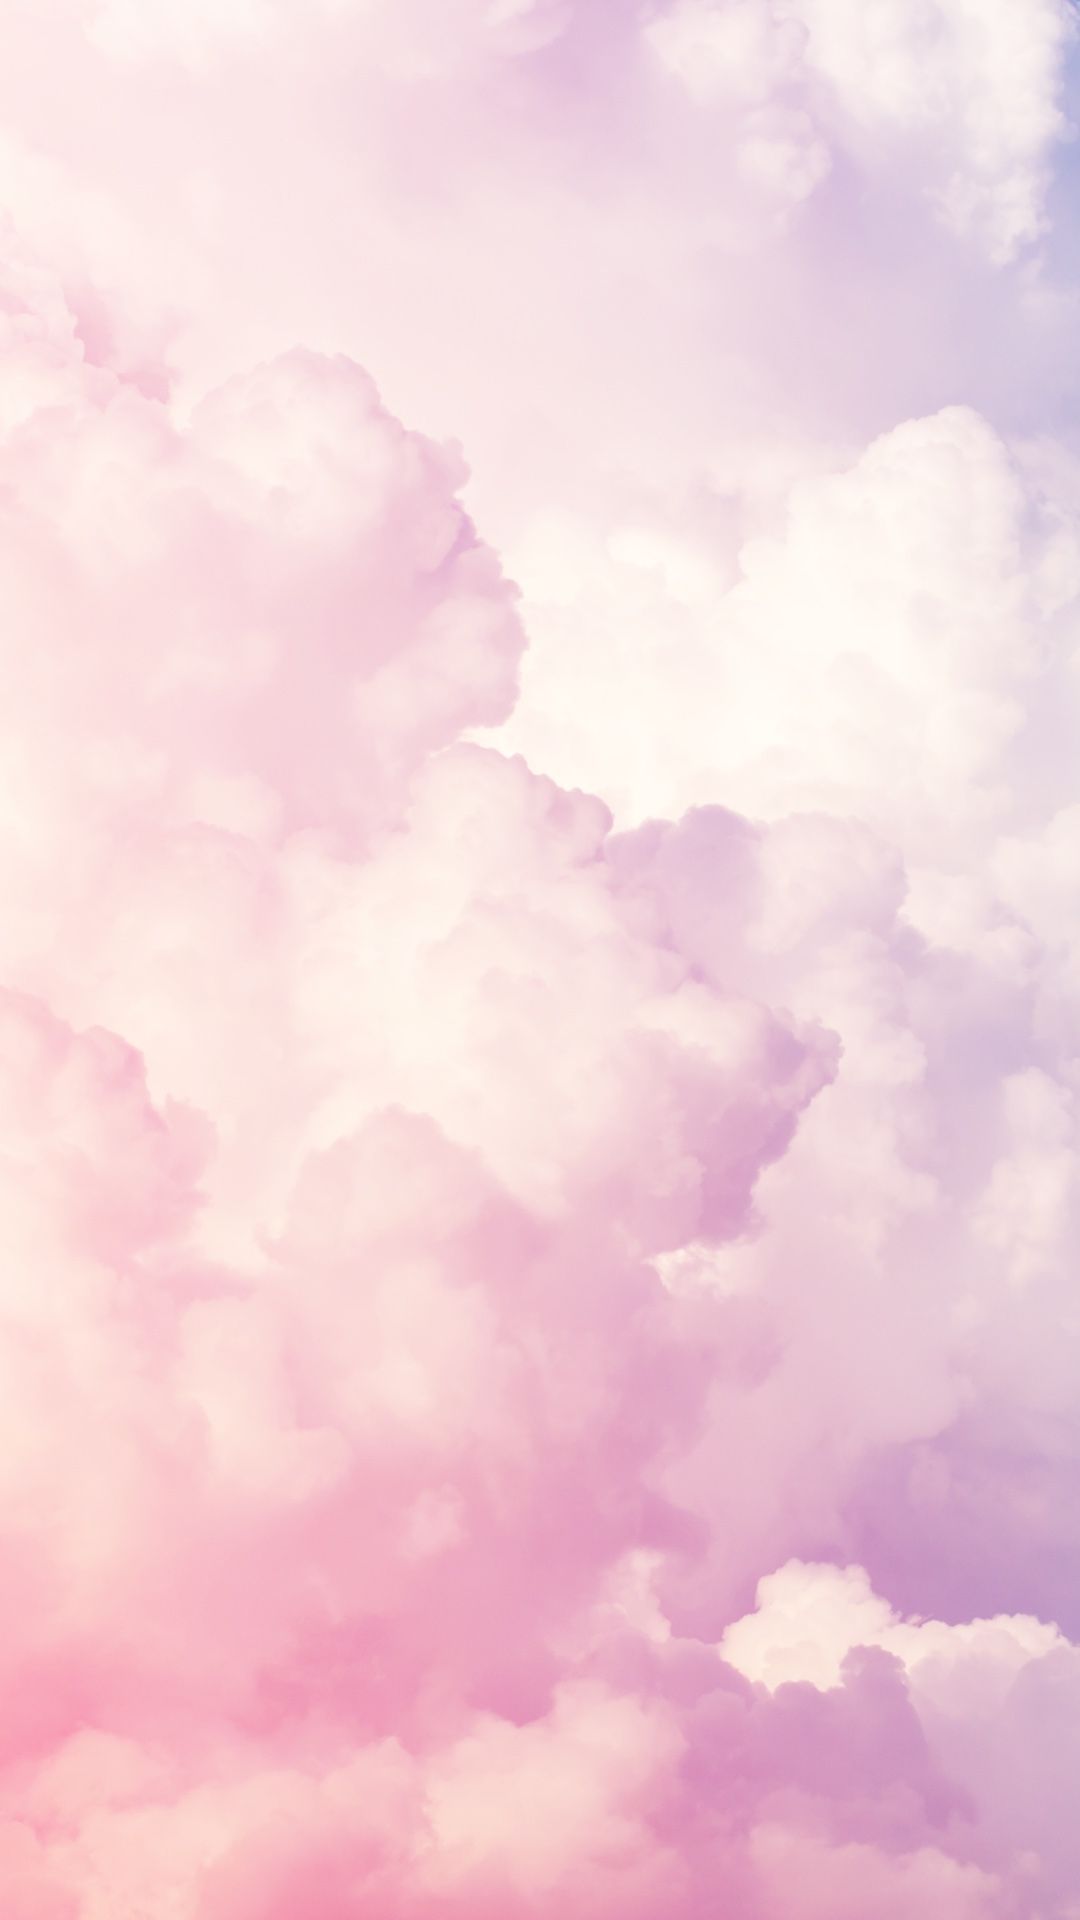 Pastel Pink Cloud Wallpaper Free .wallpaperaccess.com